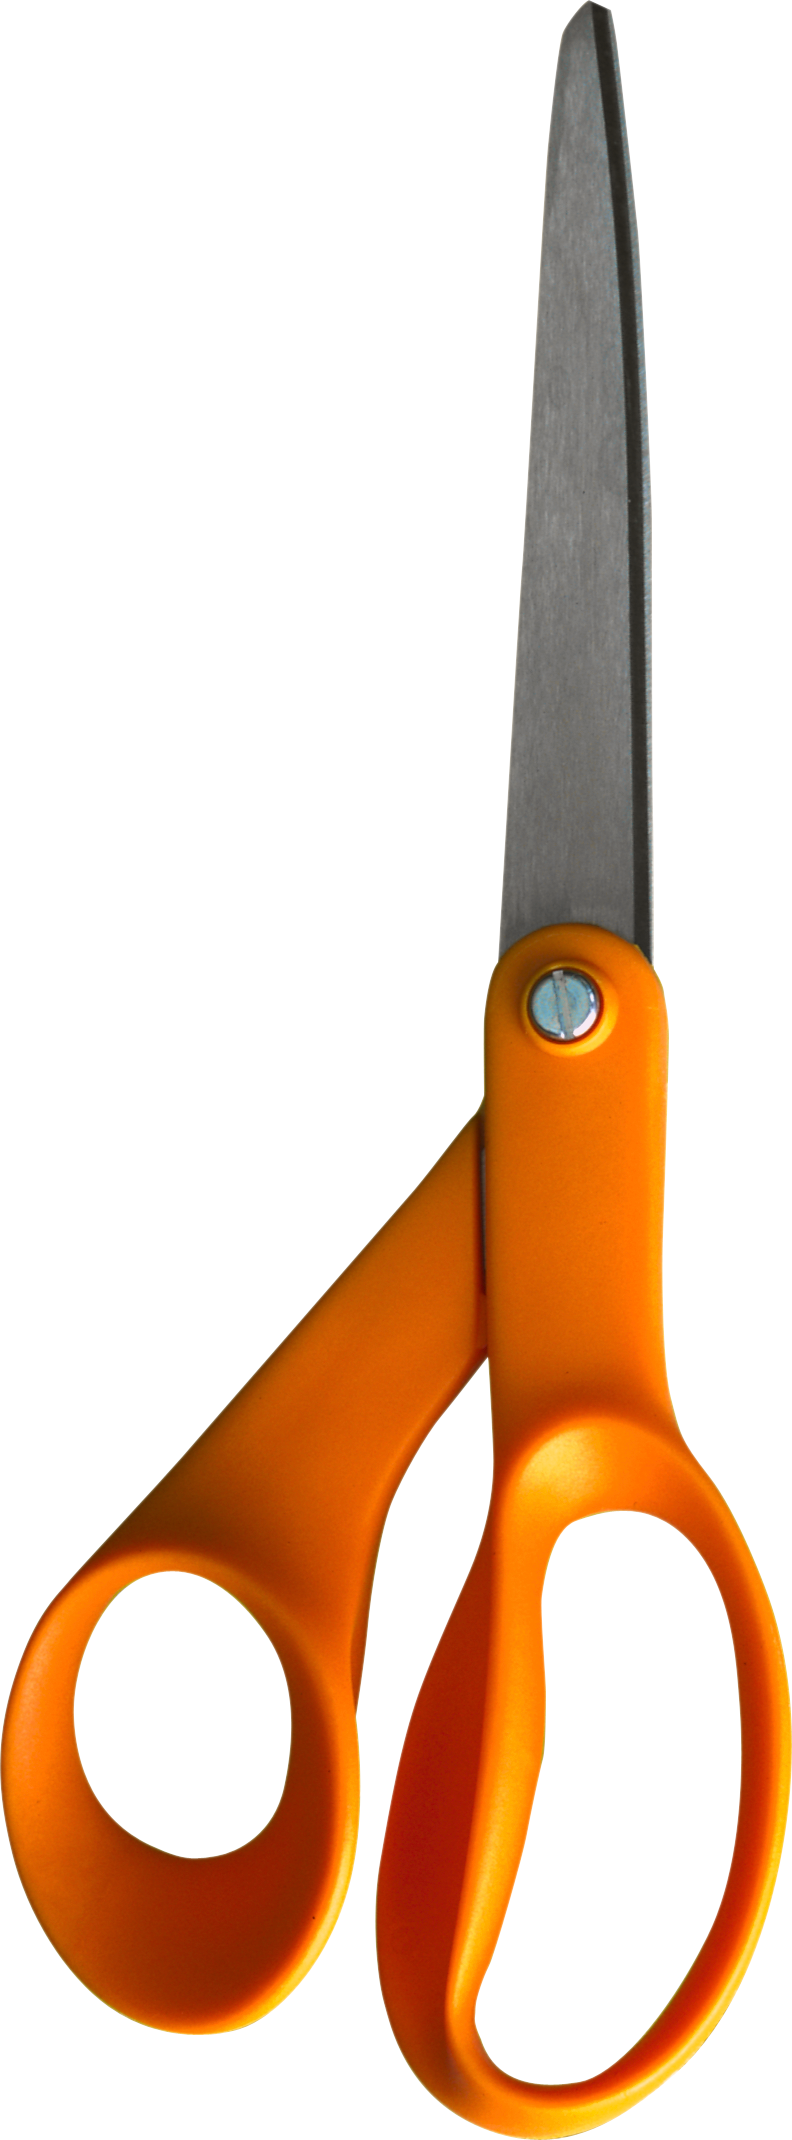 Orange Scissors PNG images  download